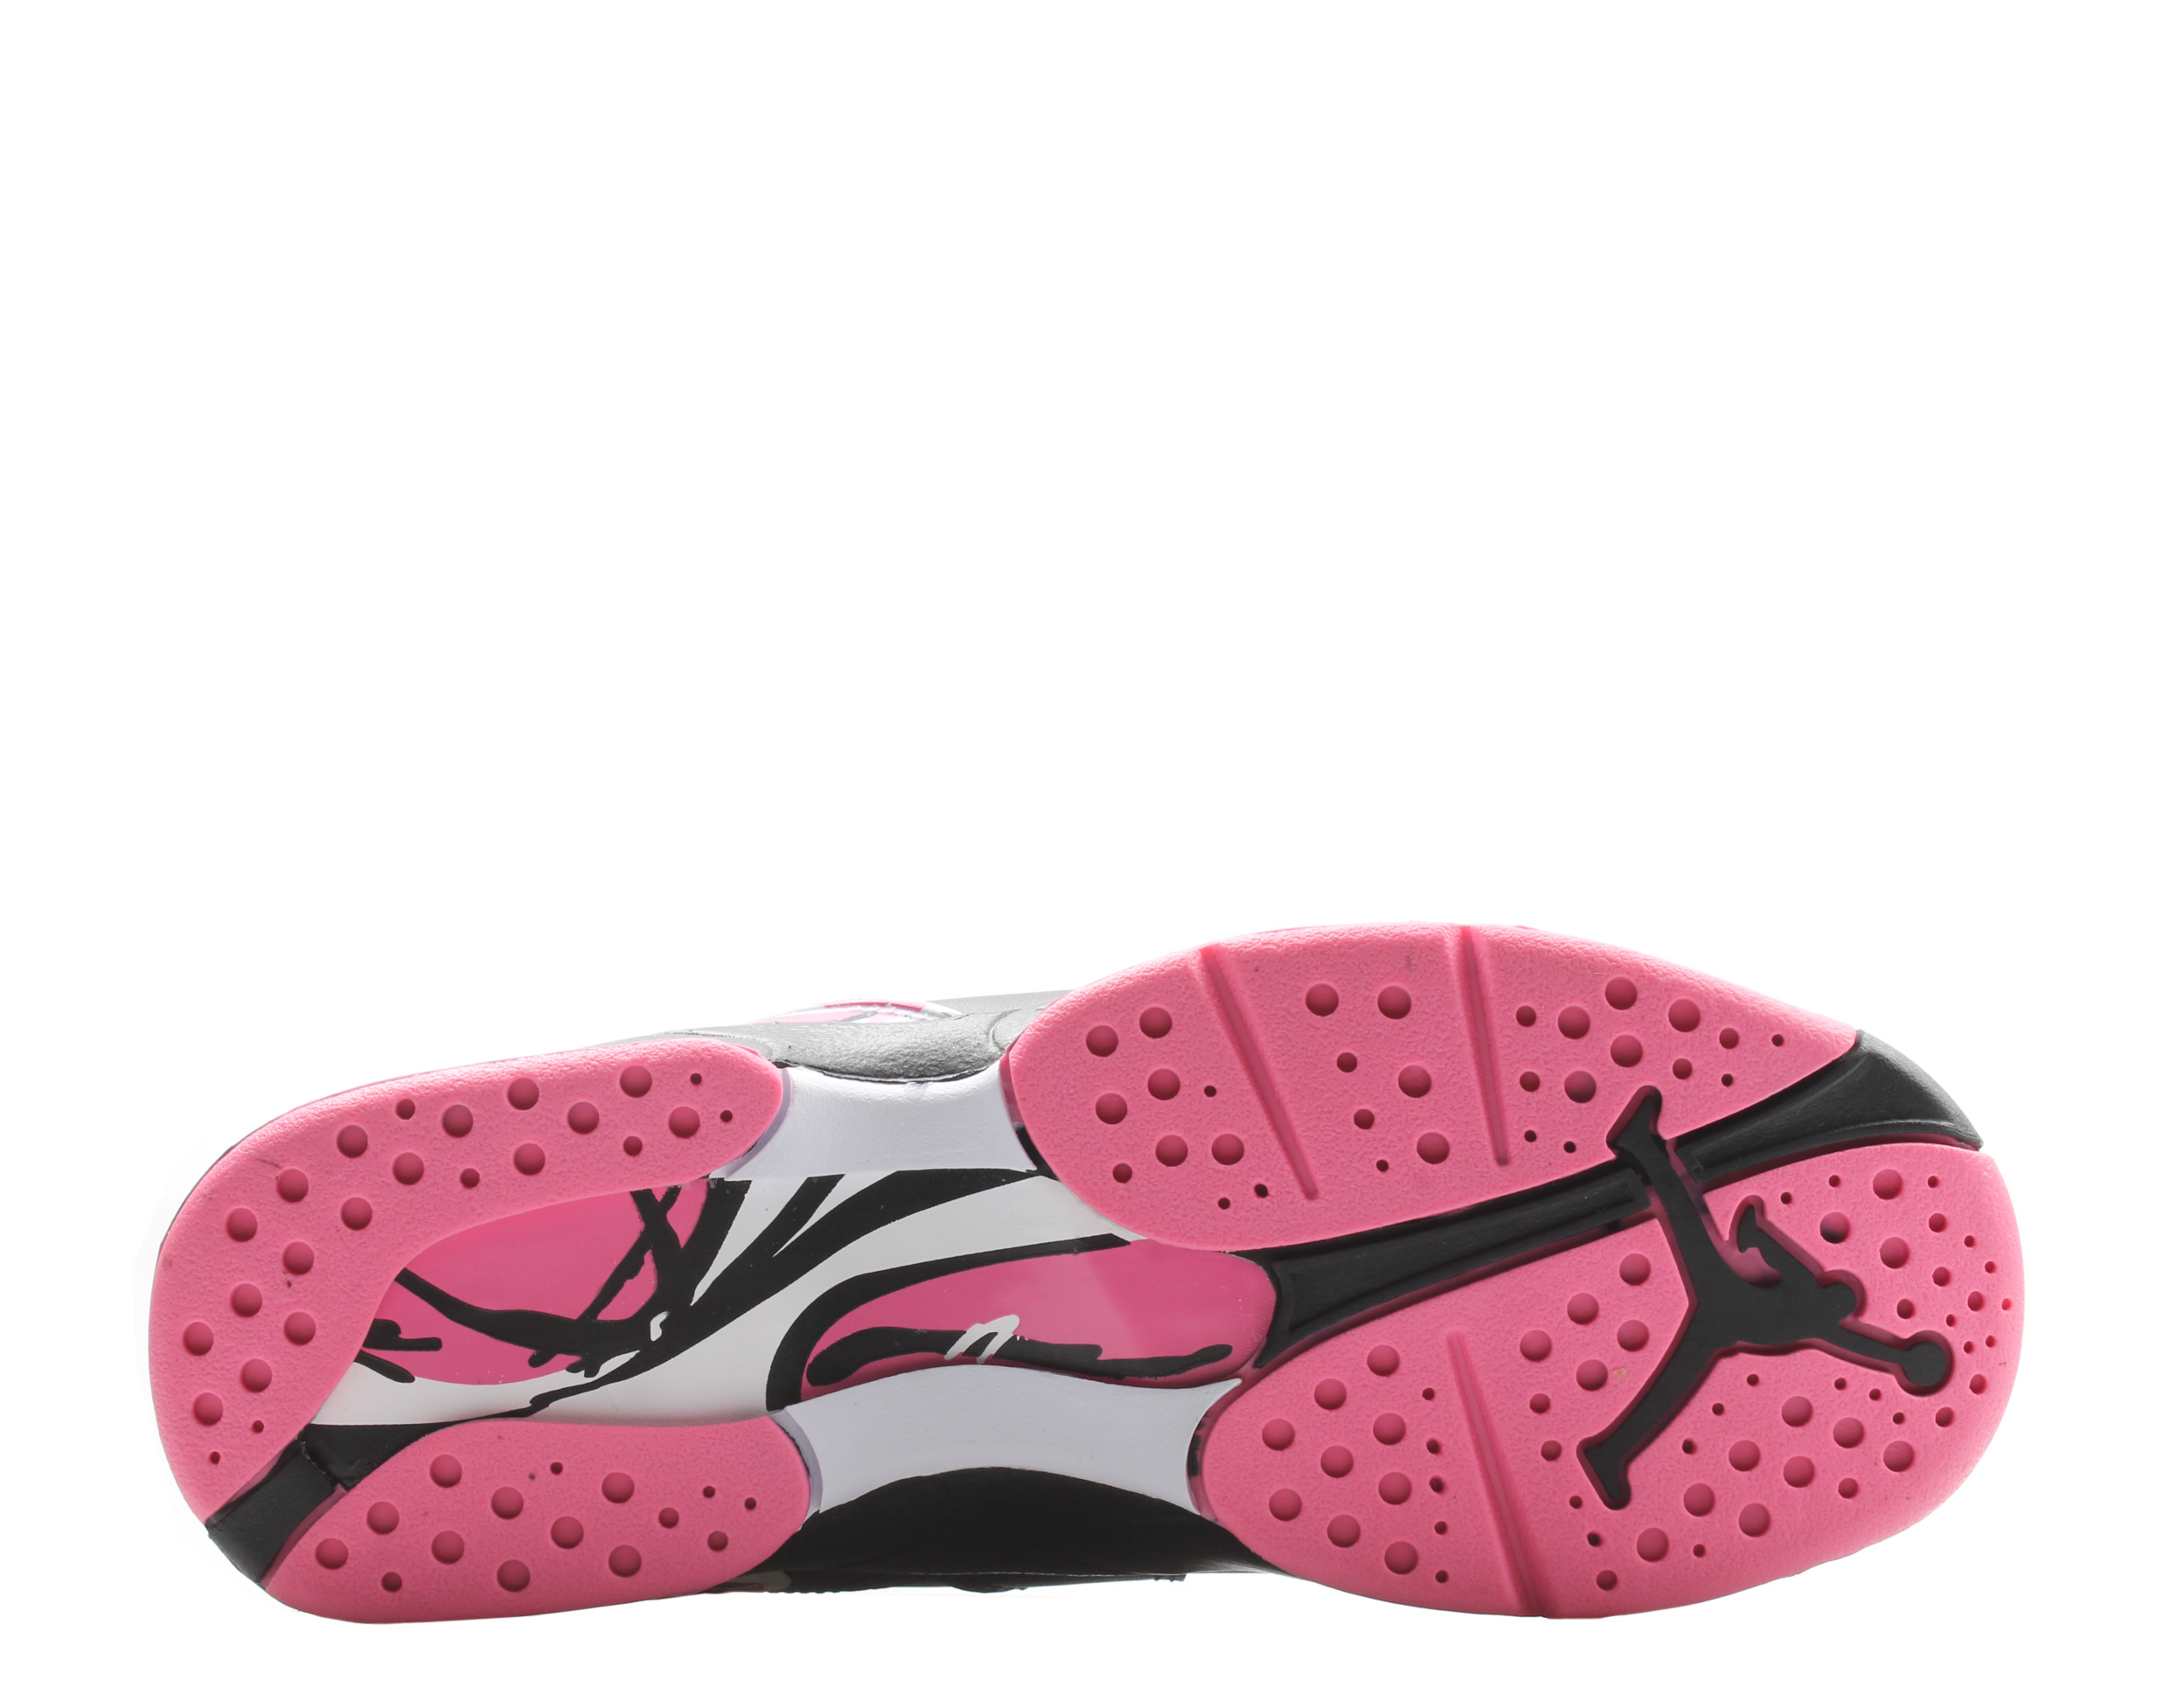 Nike Air Jordan 8 Retro (GS) Big Girls Basketball Shoes Size 6.5 - image 5 of 6